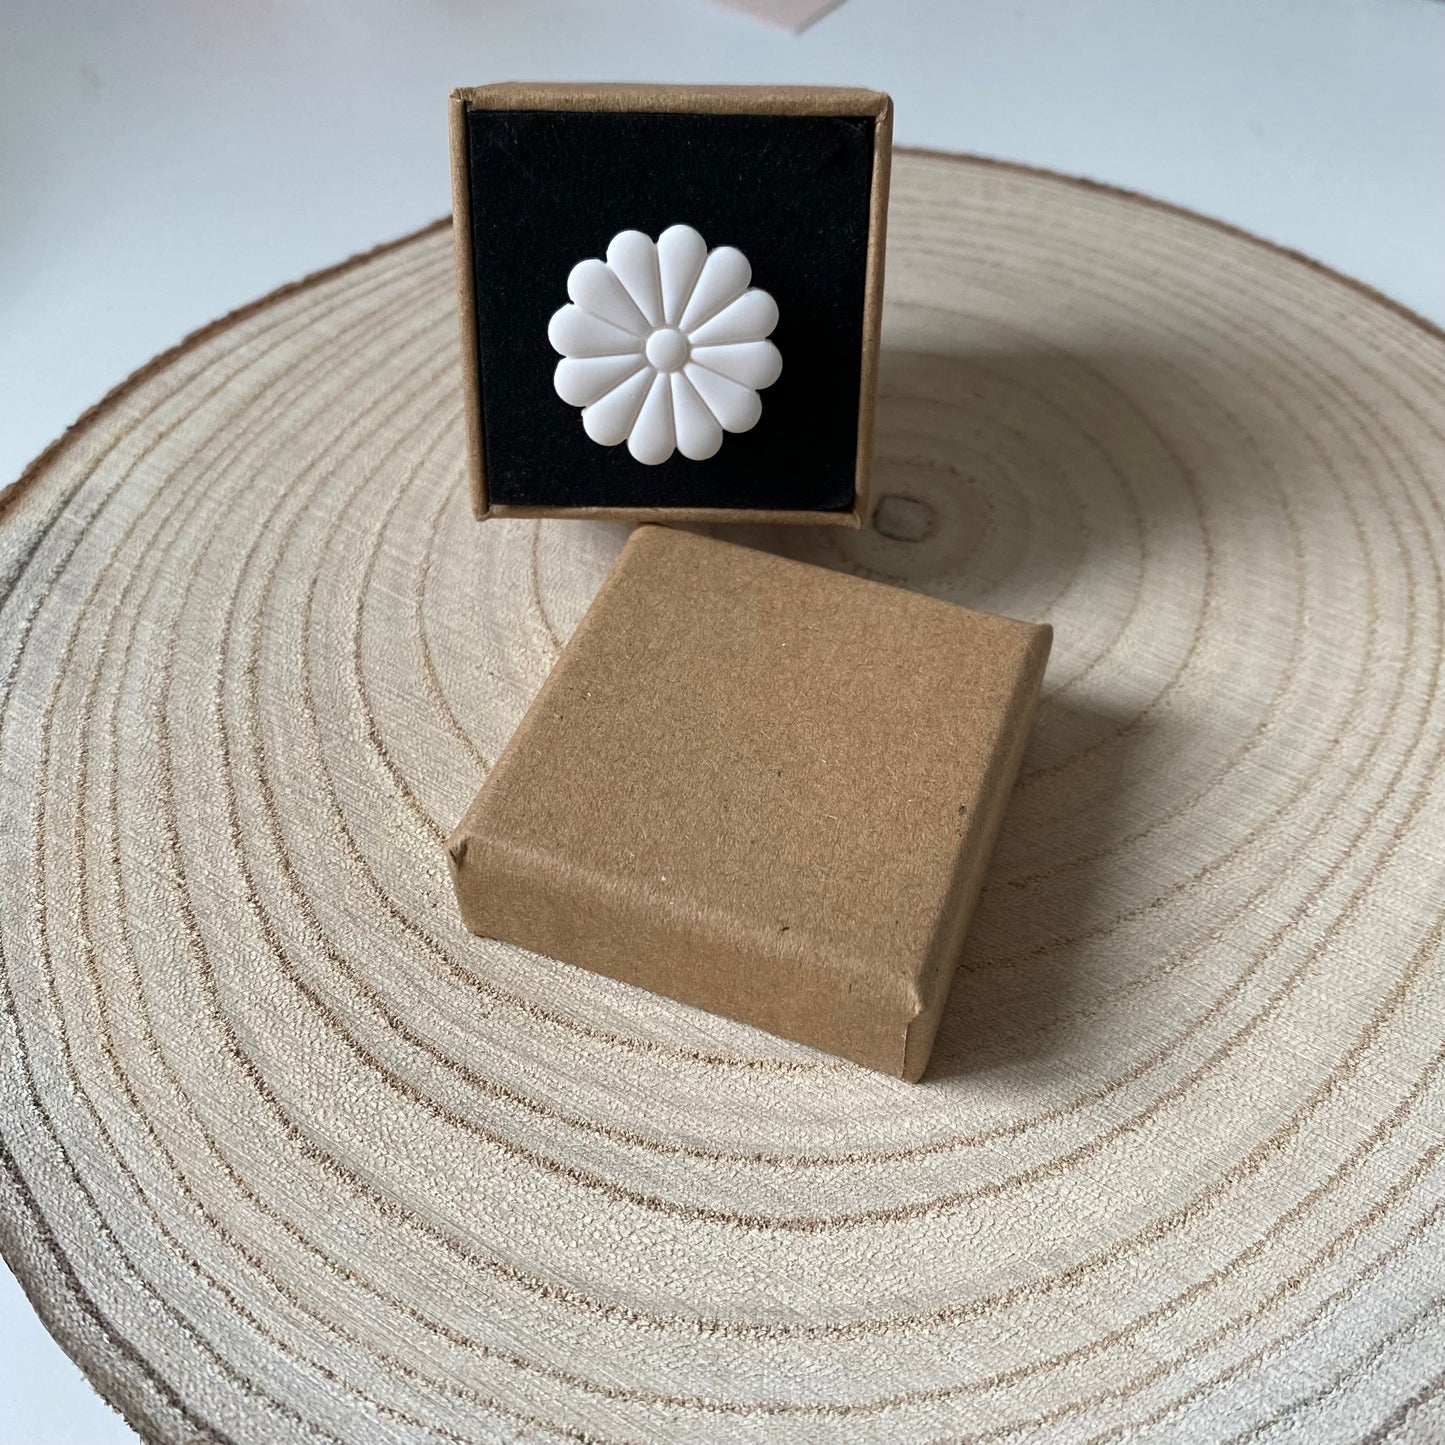 Retro daisy flower ring handmade in UK ~ adjustable ring